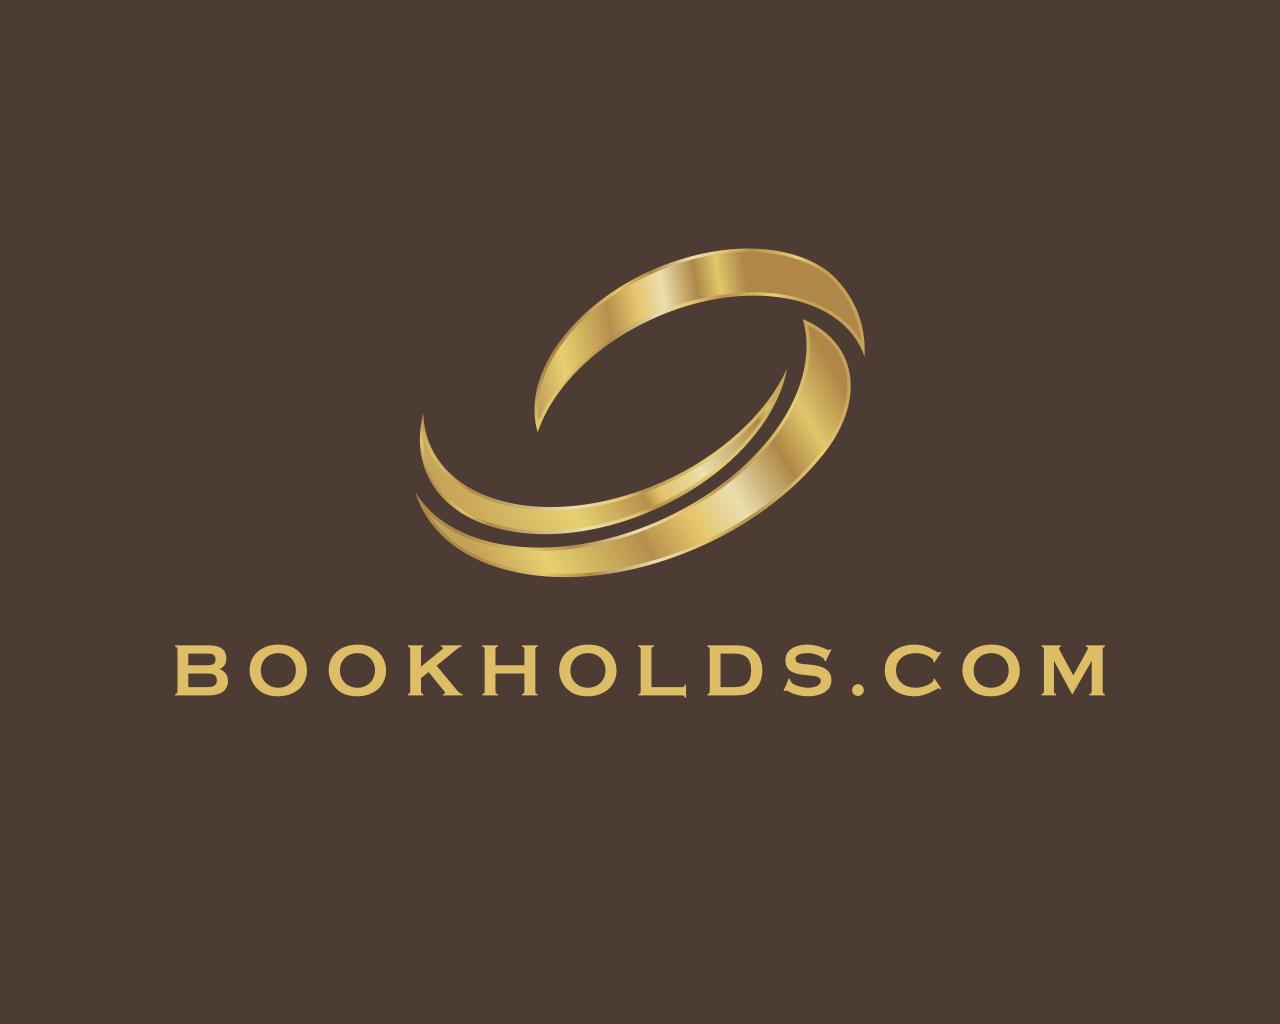 BOOKHOLDS.COM